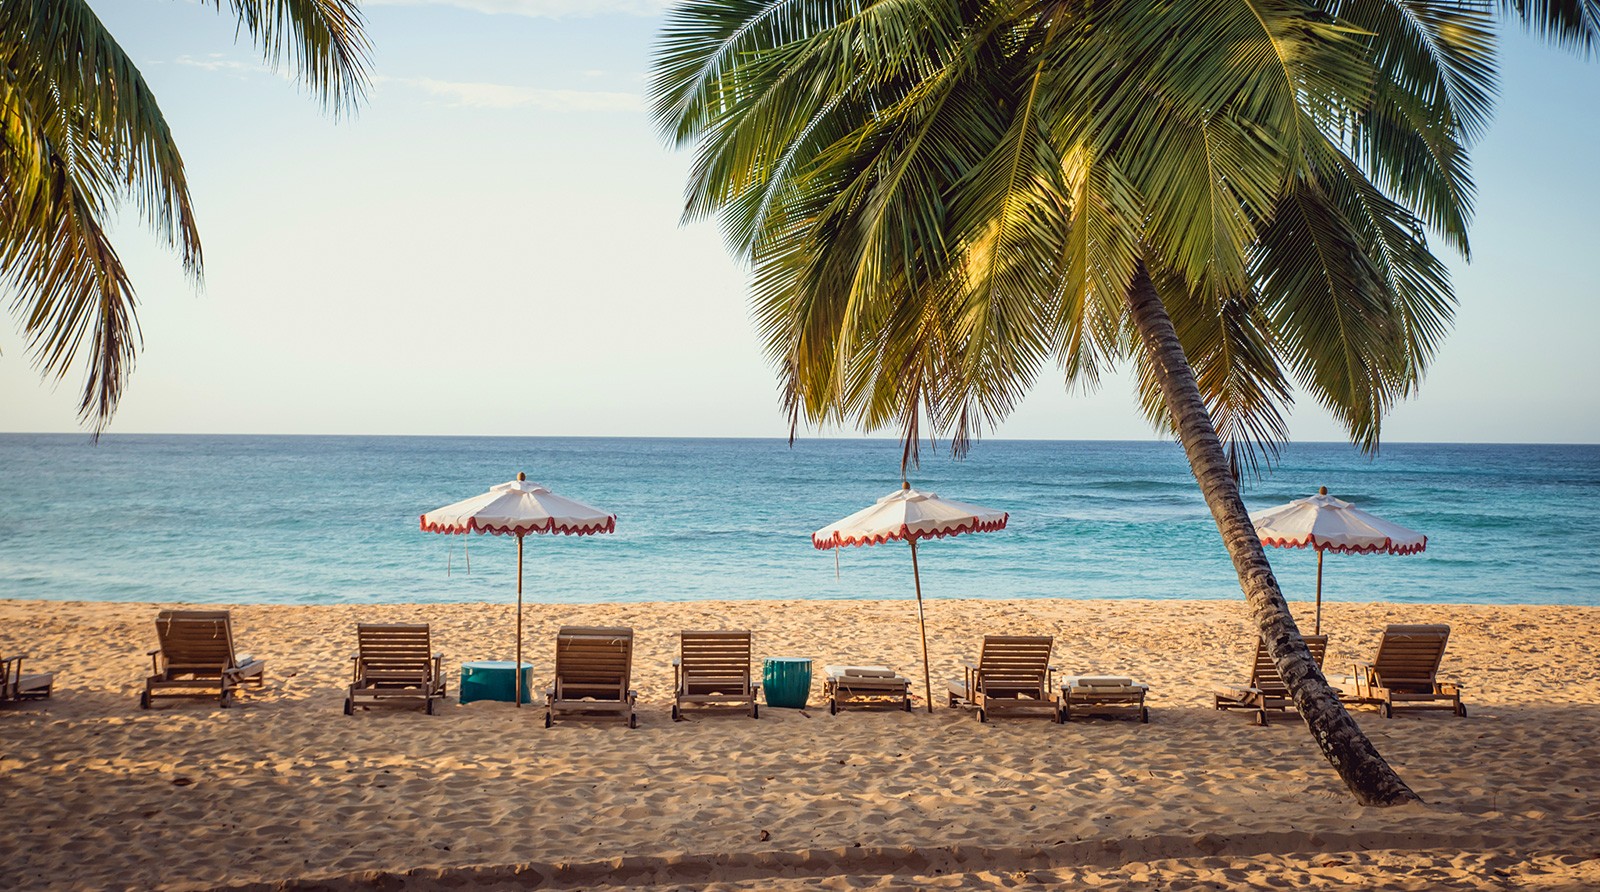 Places: Playa Grande Beach Club, Dominican Republic